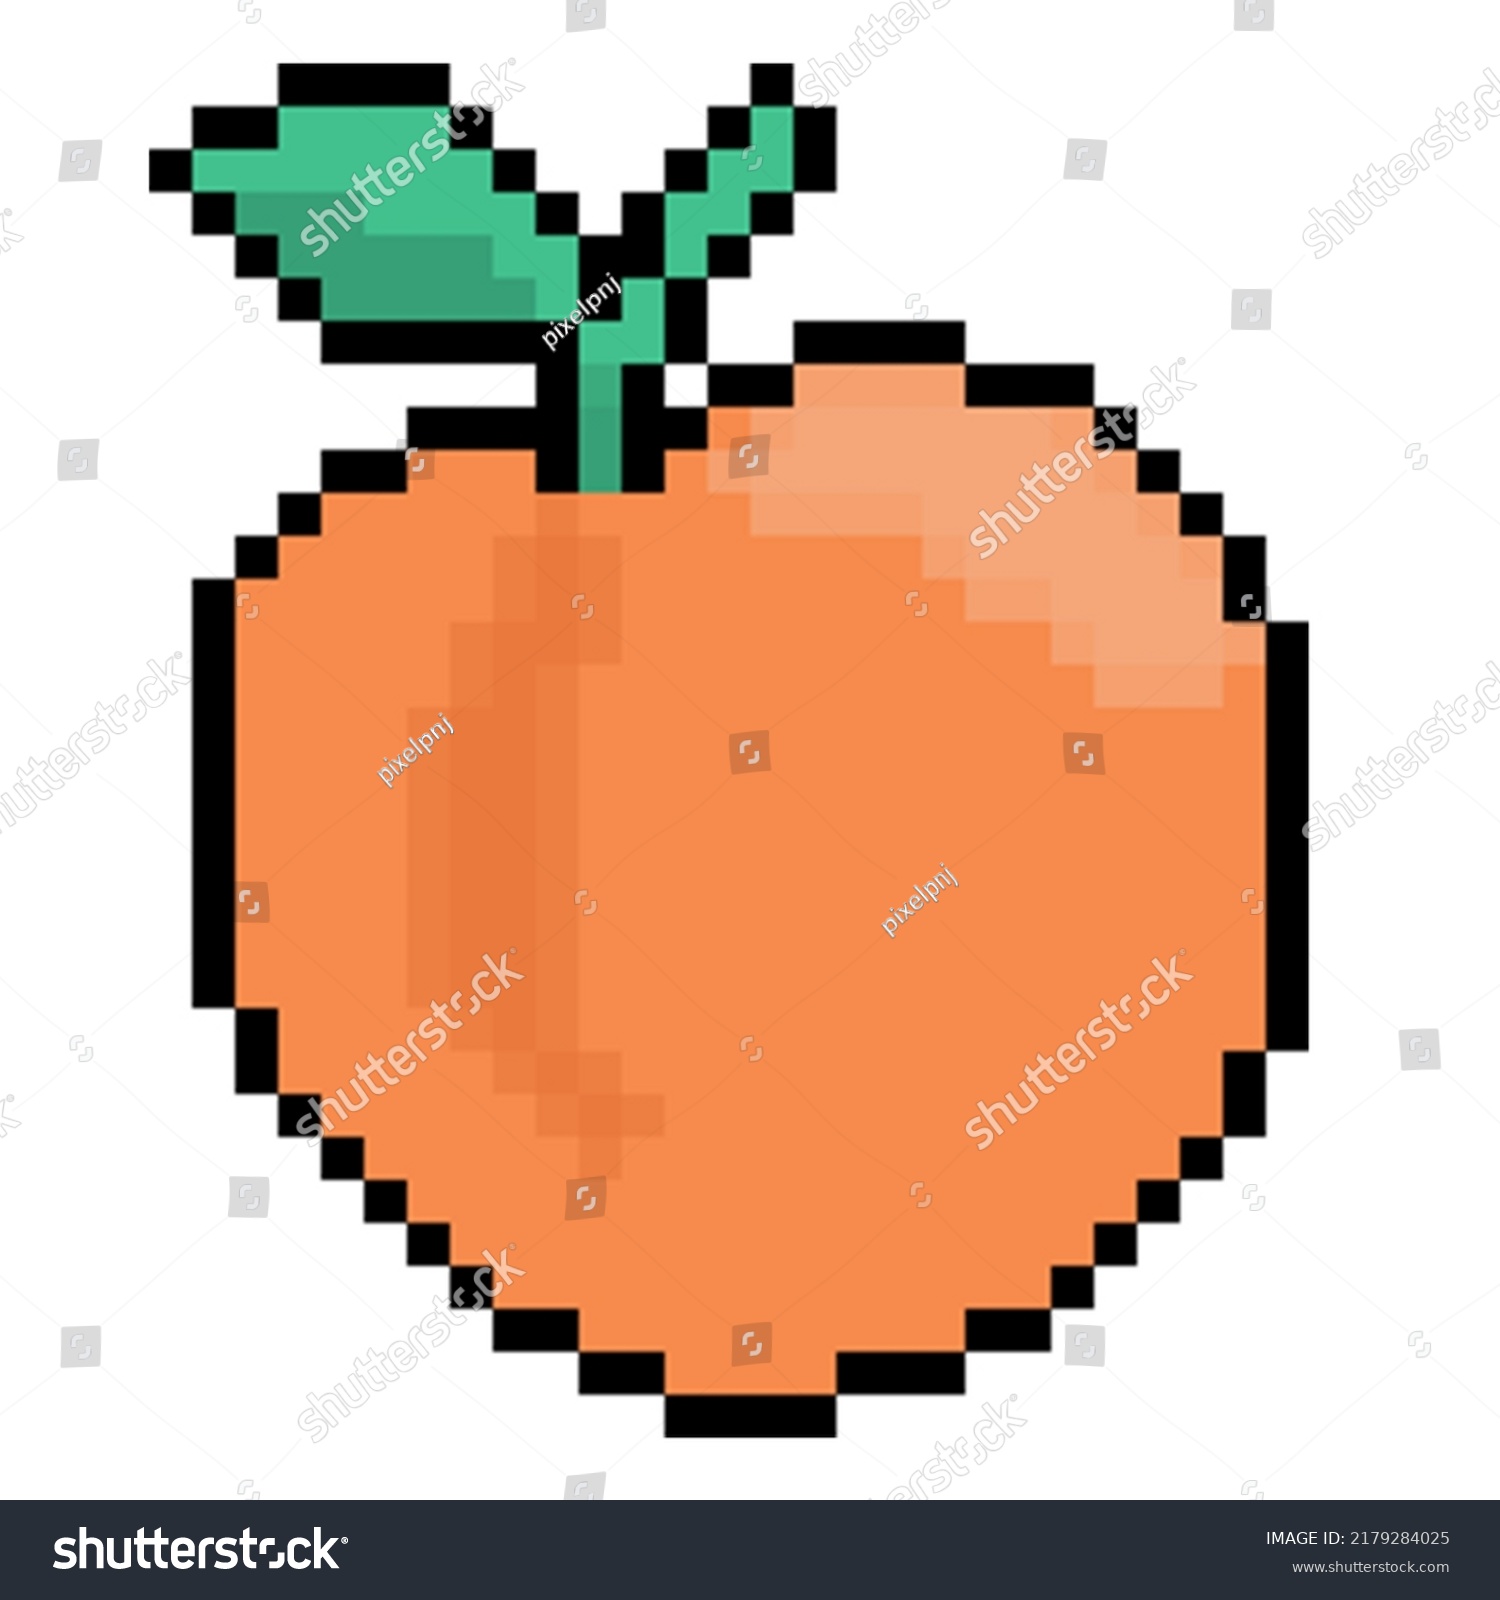 Peach Pixel Art 32 Bit Stock Vector (Royalty Free) 2179284025 ...